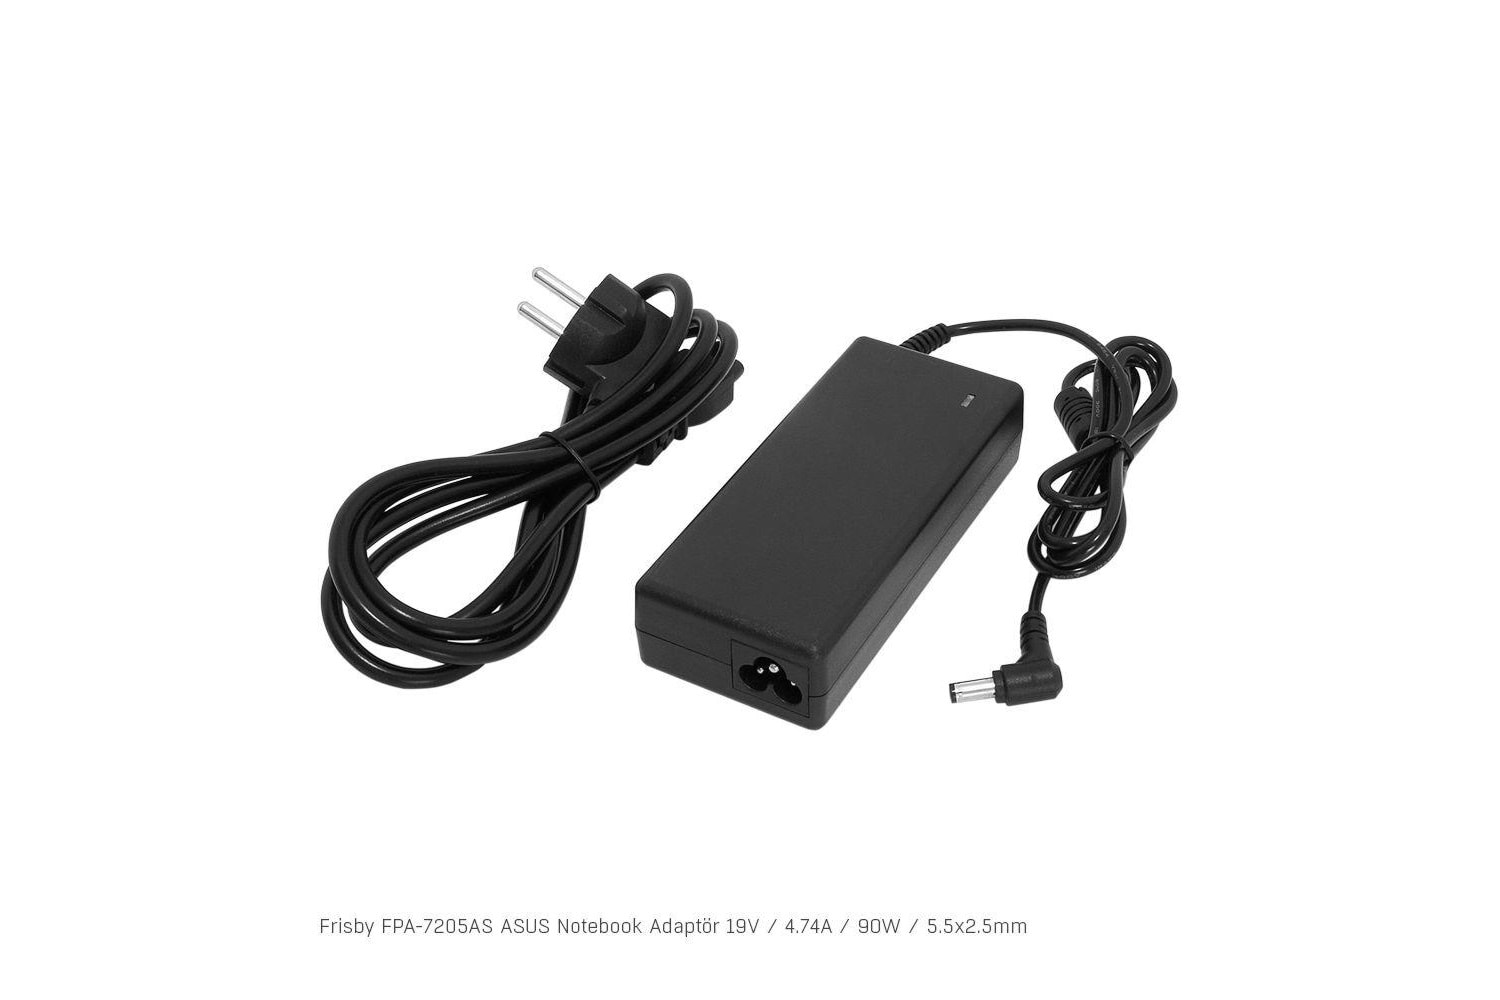 Frisby FPA-7205AS Notebook Adaptör (Asus) 19V 4.74A (Uç Boyutu : 5.5 x 2.5mm)